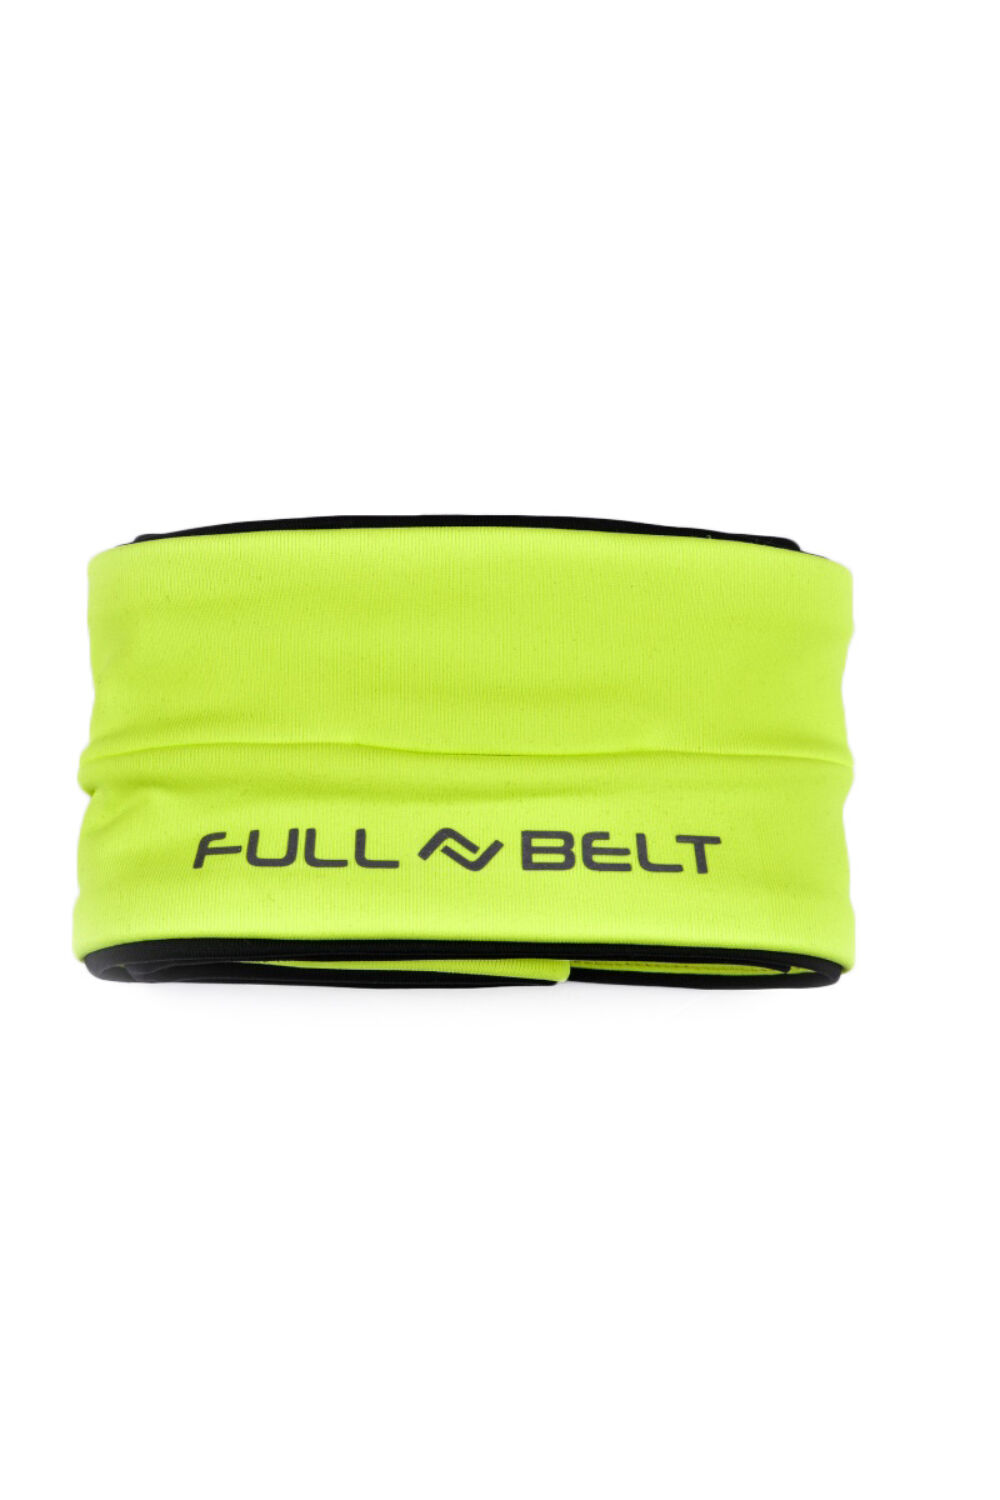 Indi-Go Full-Belt futóöv fekete-neonsárga 'L'